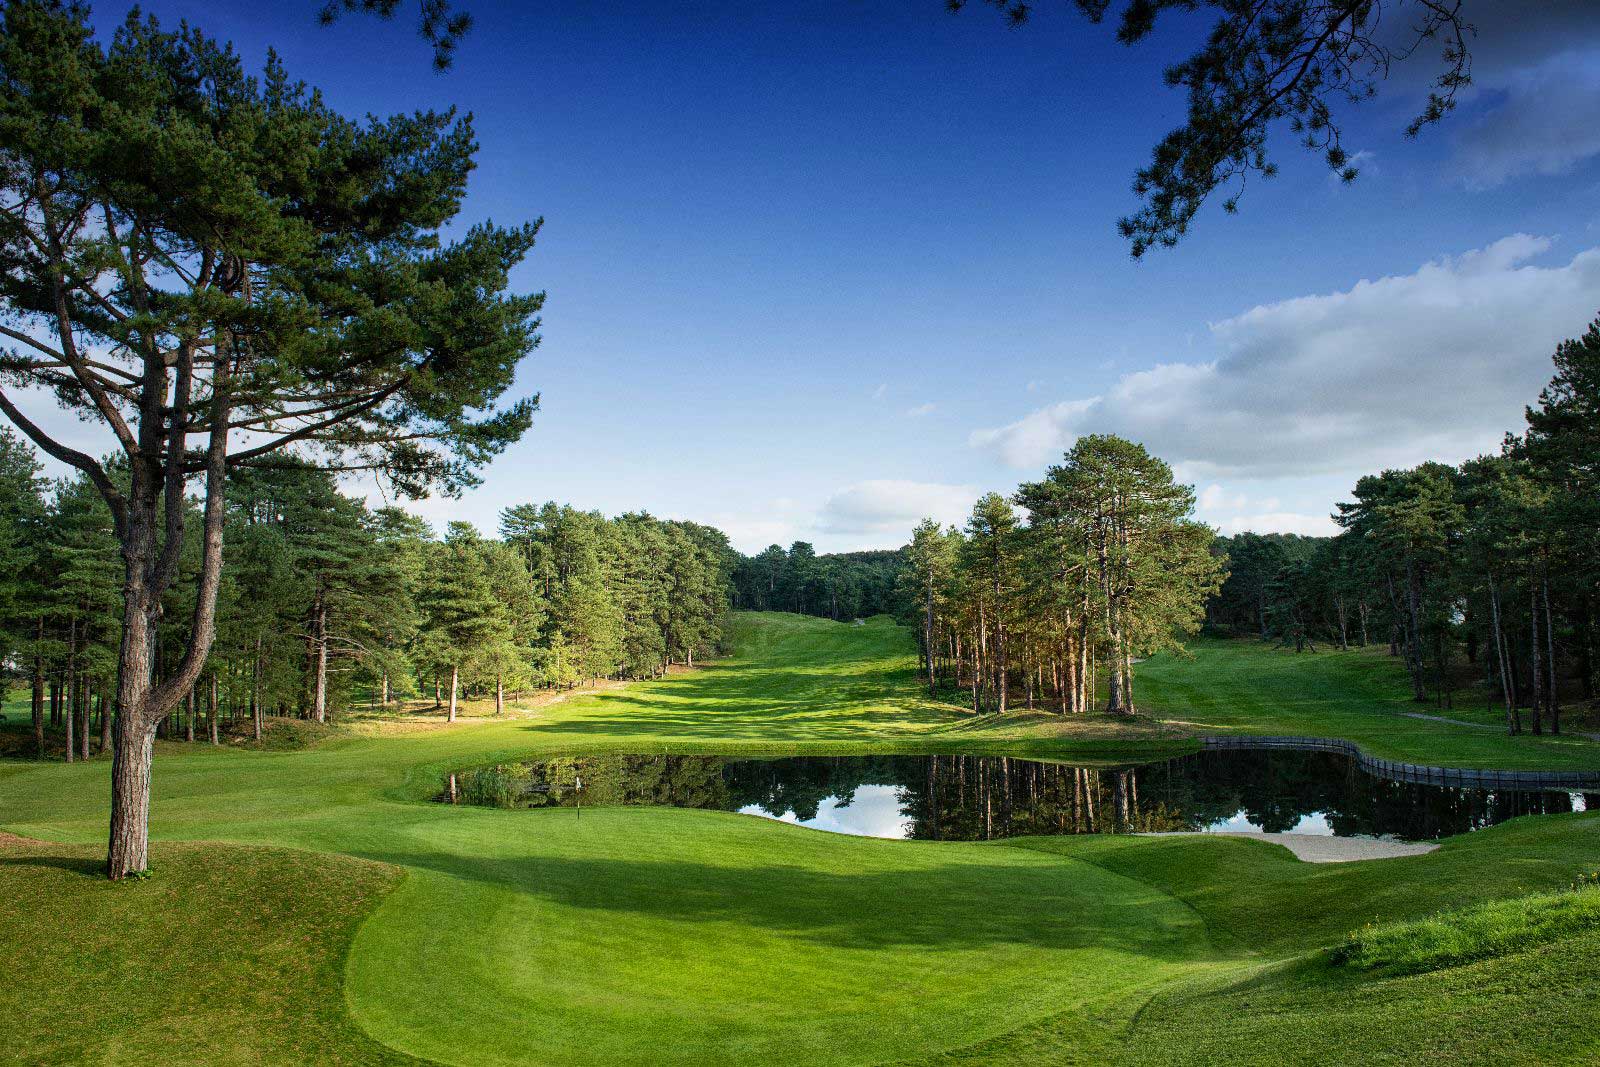 golf expedition golf reizen frankrijk regio pas de calais le manoir hotel golfbaan water hazard green